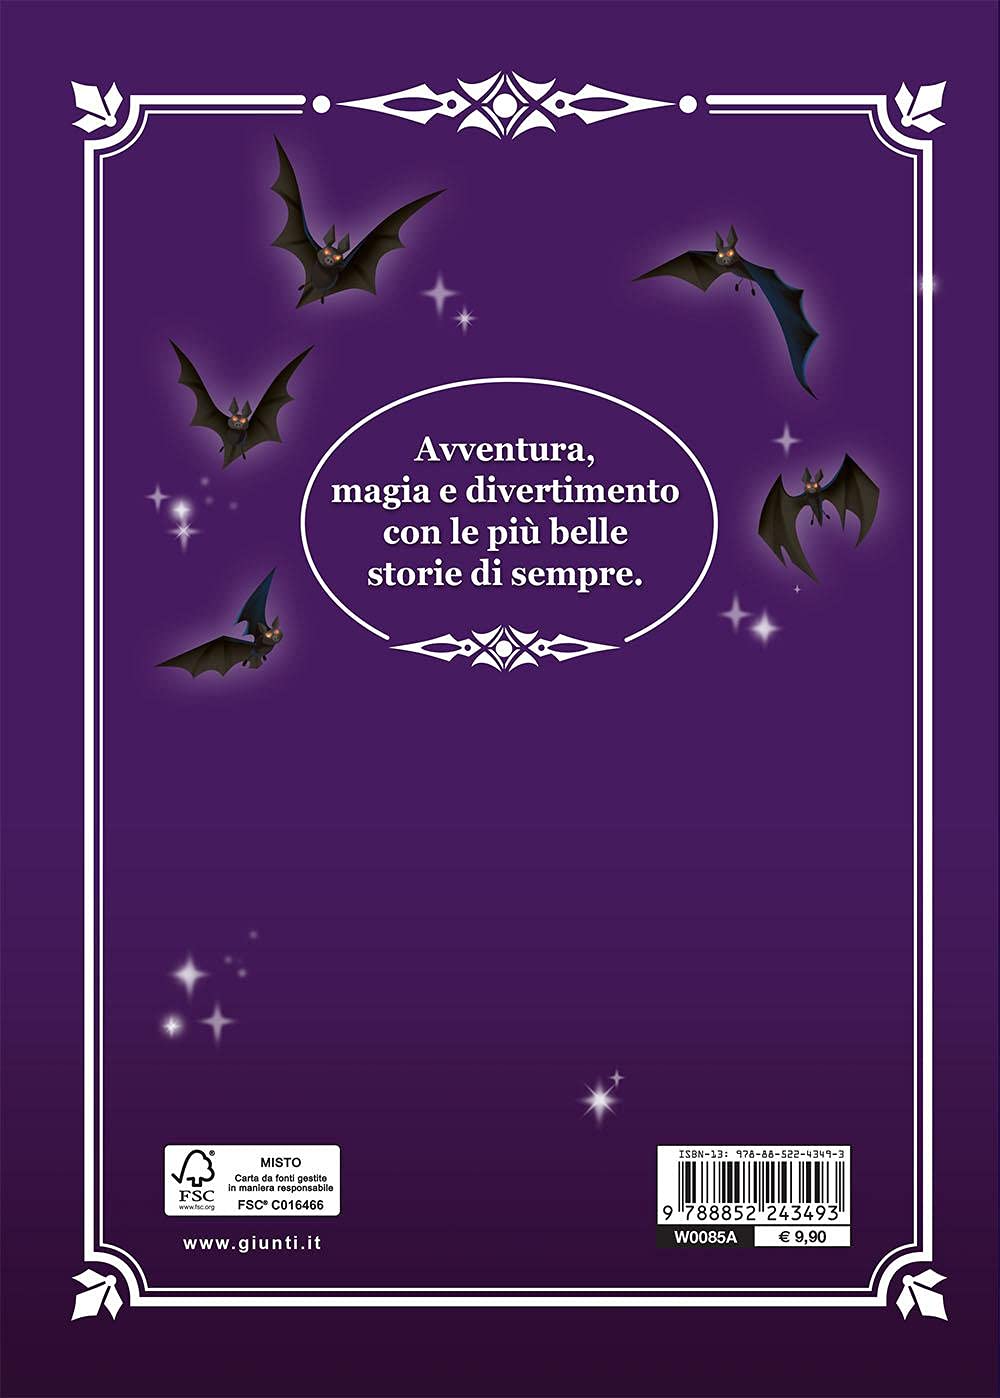 Disney Libri – Storie da brividi Back | Gift ideas for Halloween